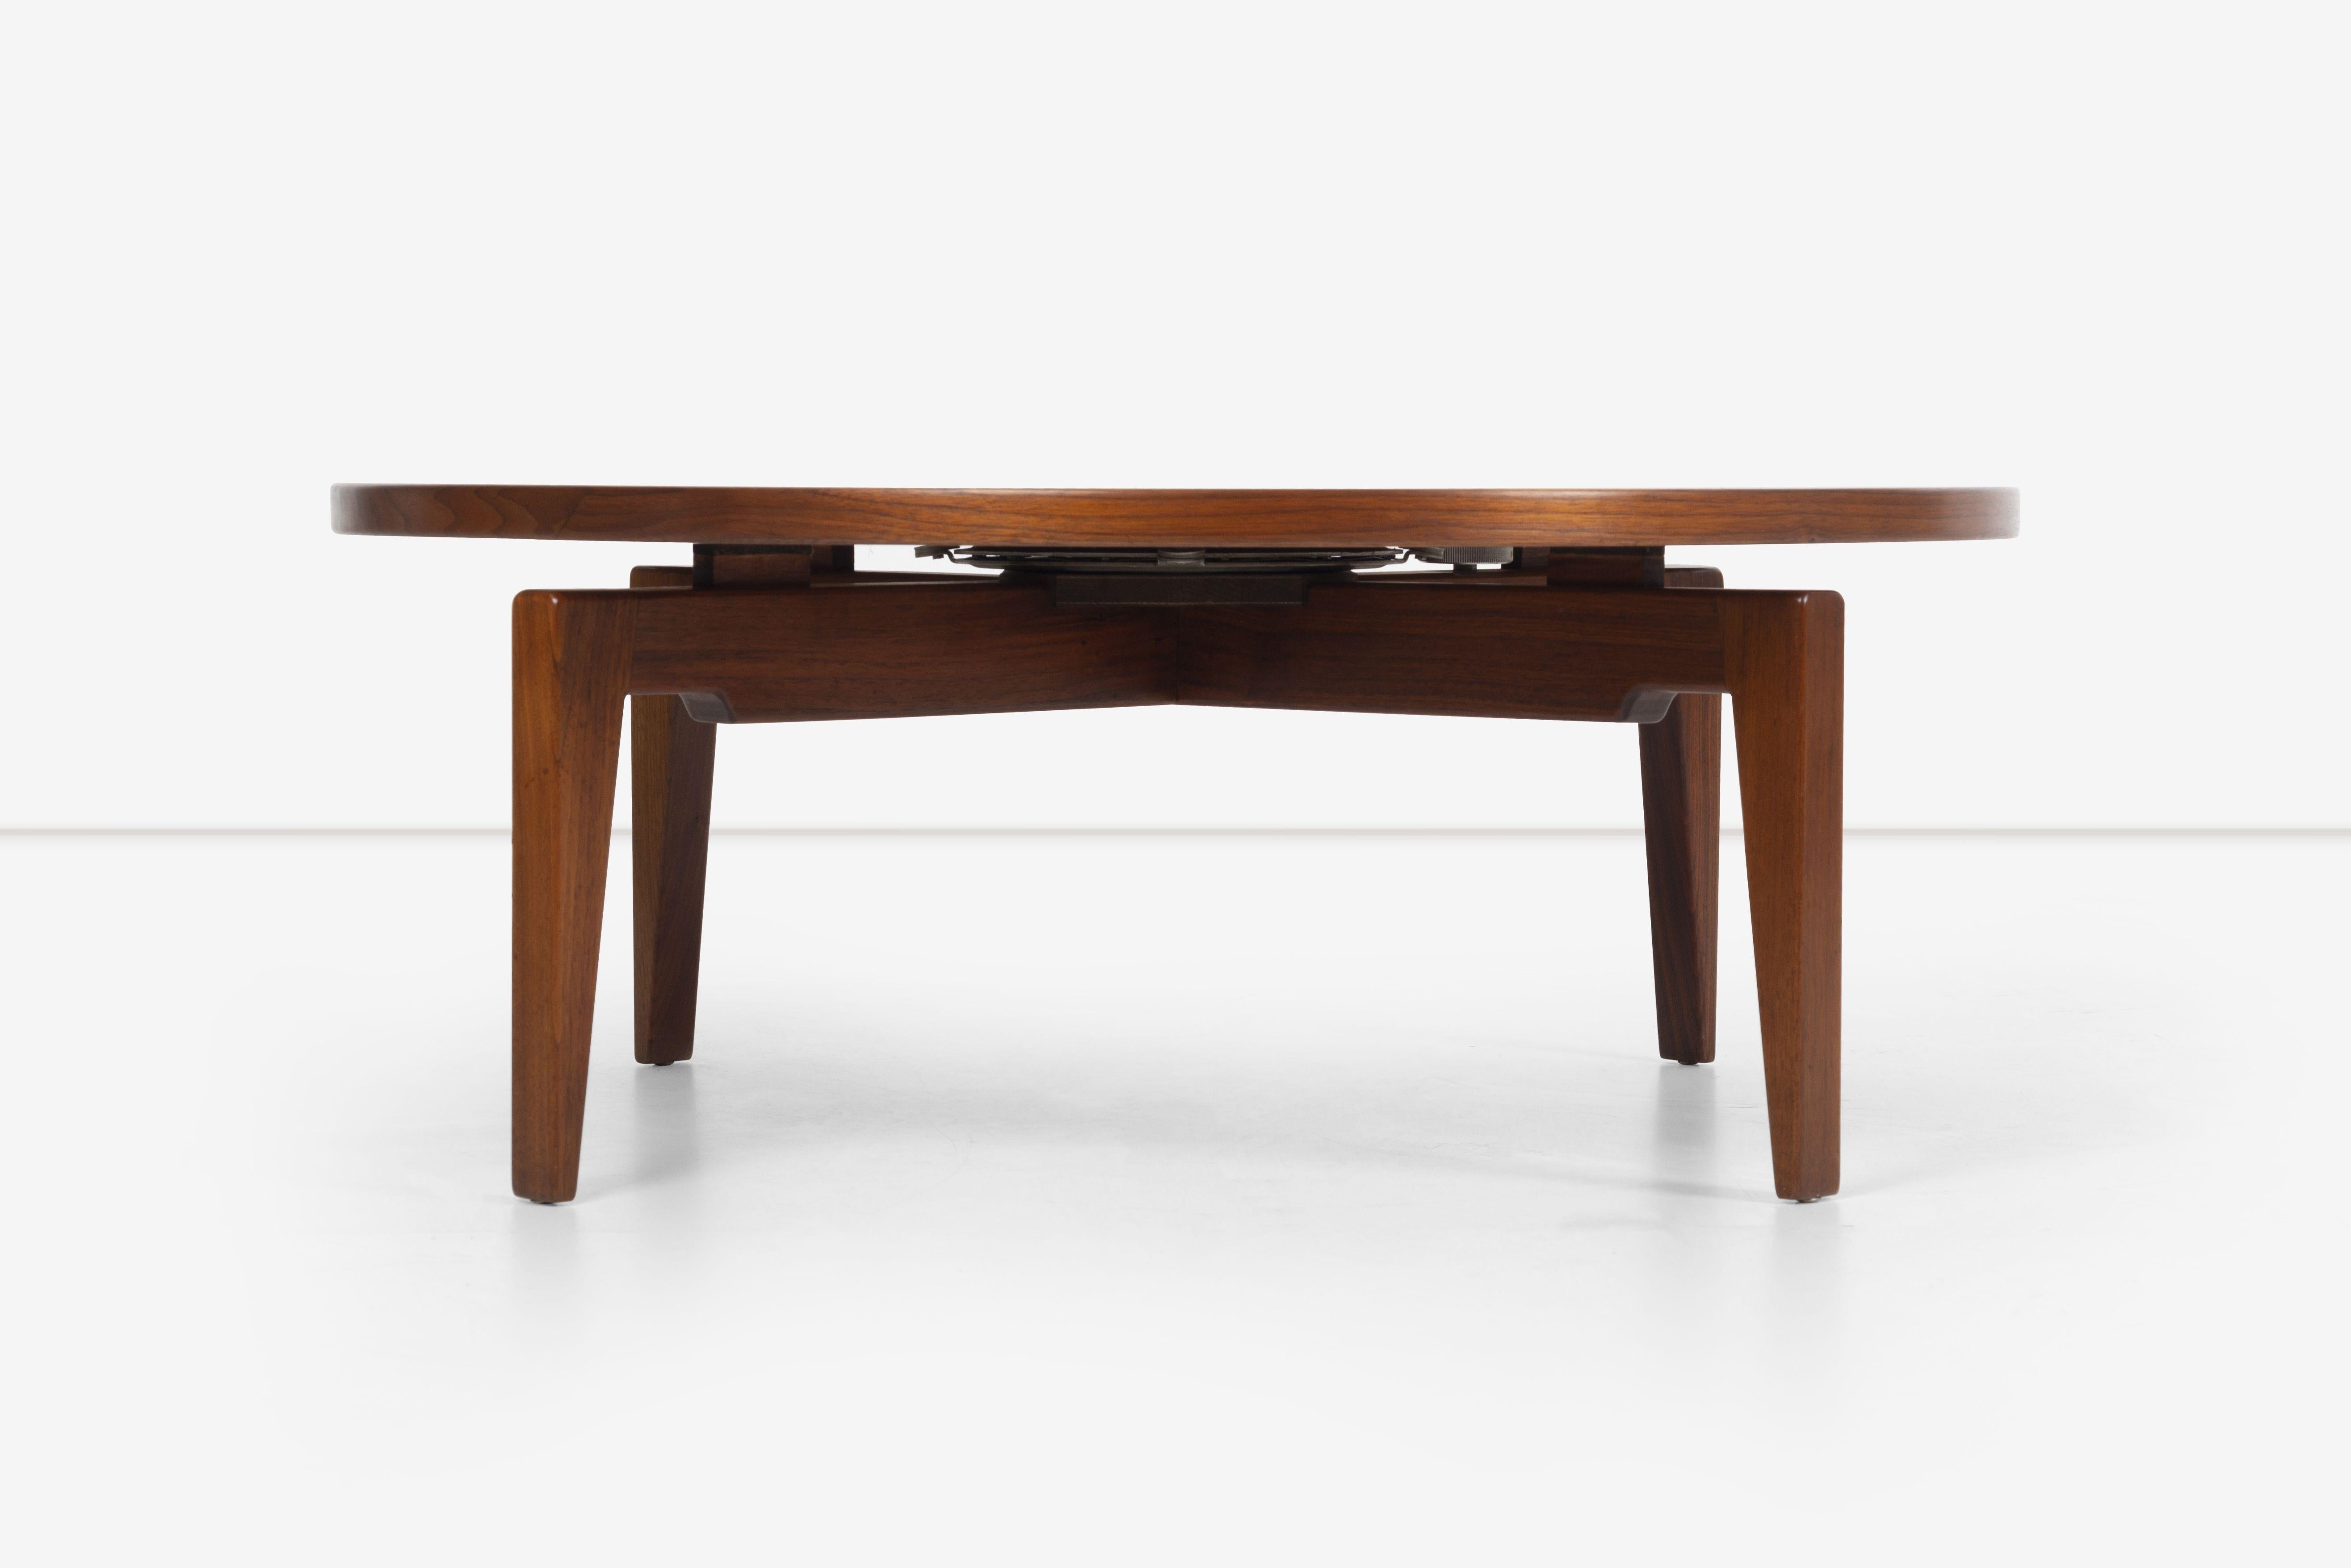 Jens Risom Walnut Coffee Table; model 4010 designed 1961 revolving top with locking mechanism, solid walnut tapered legs.